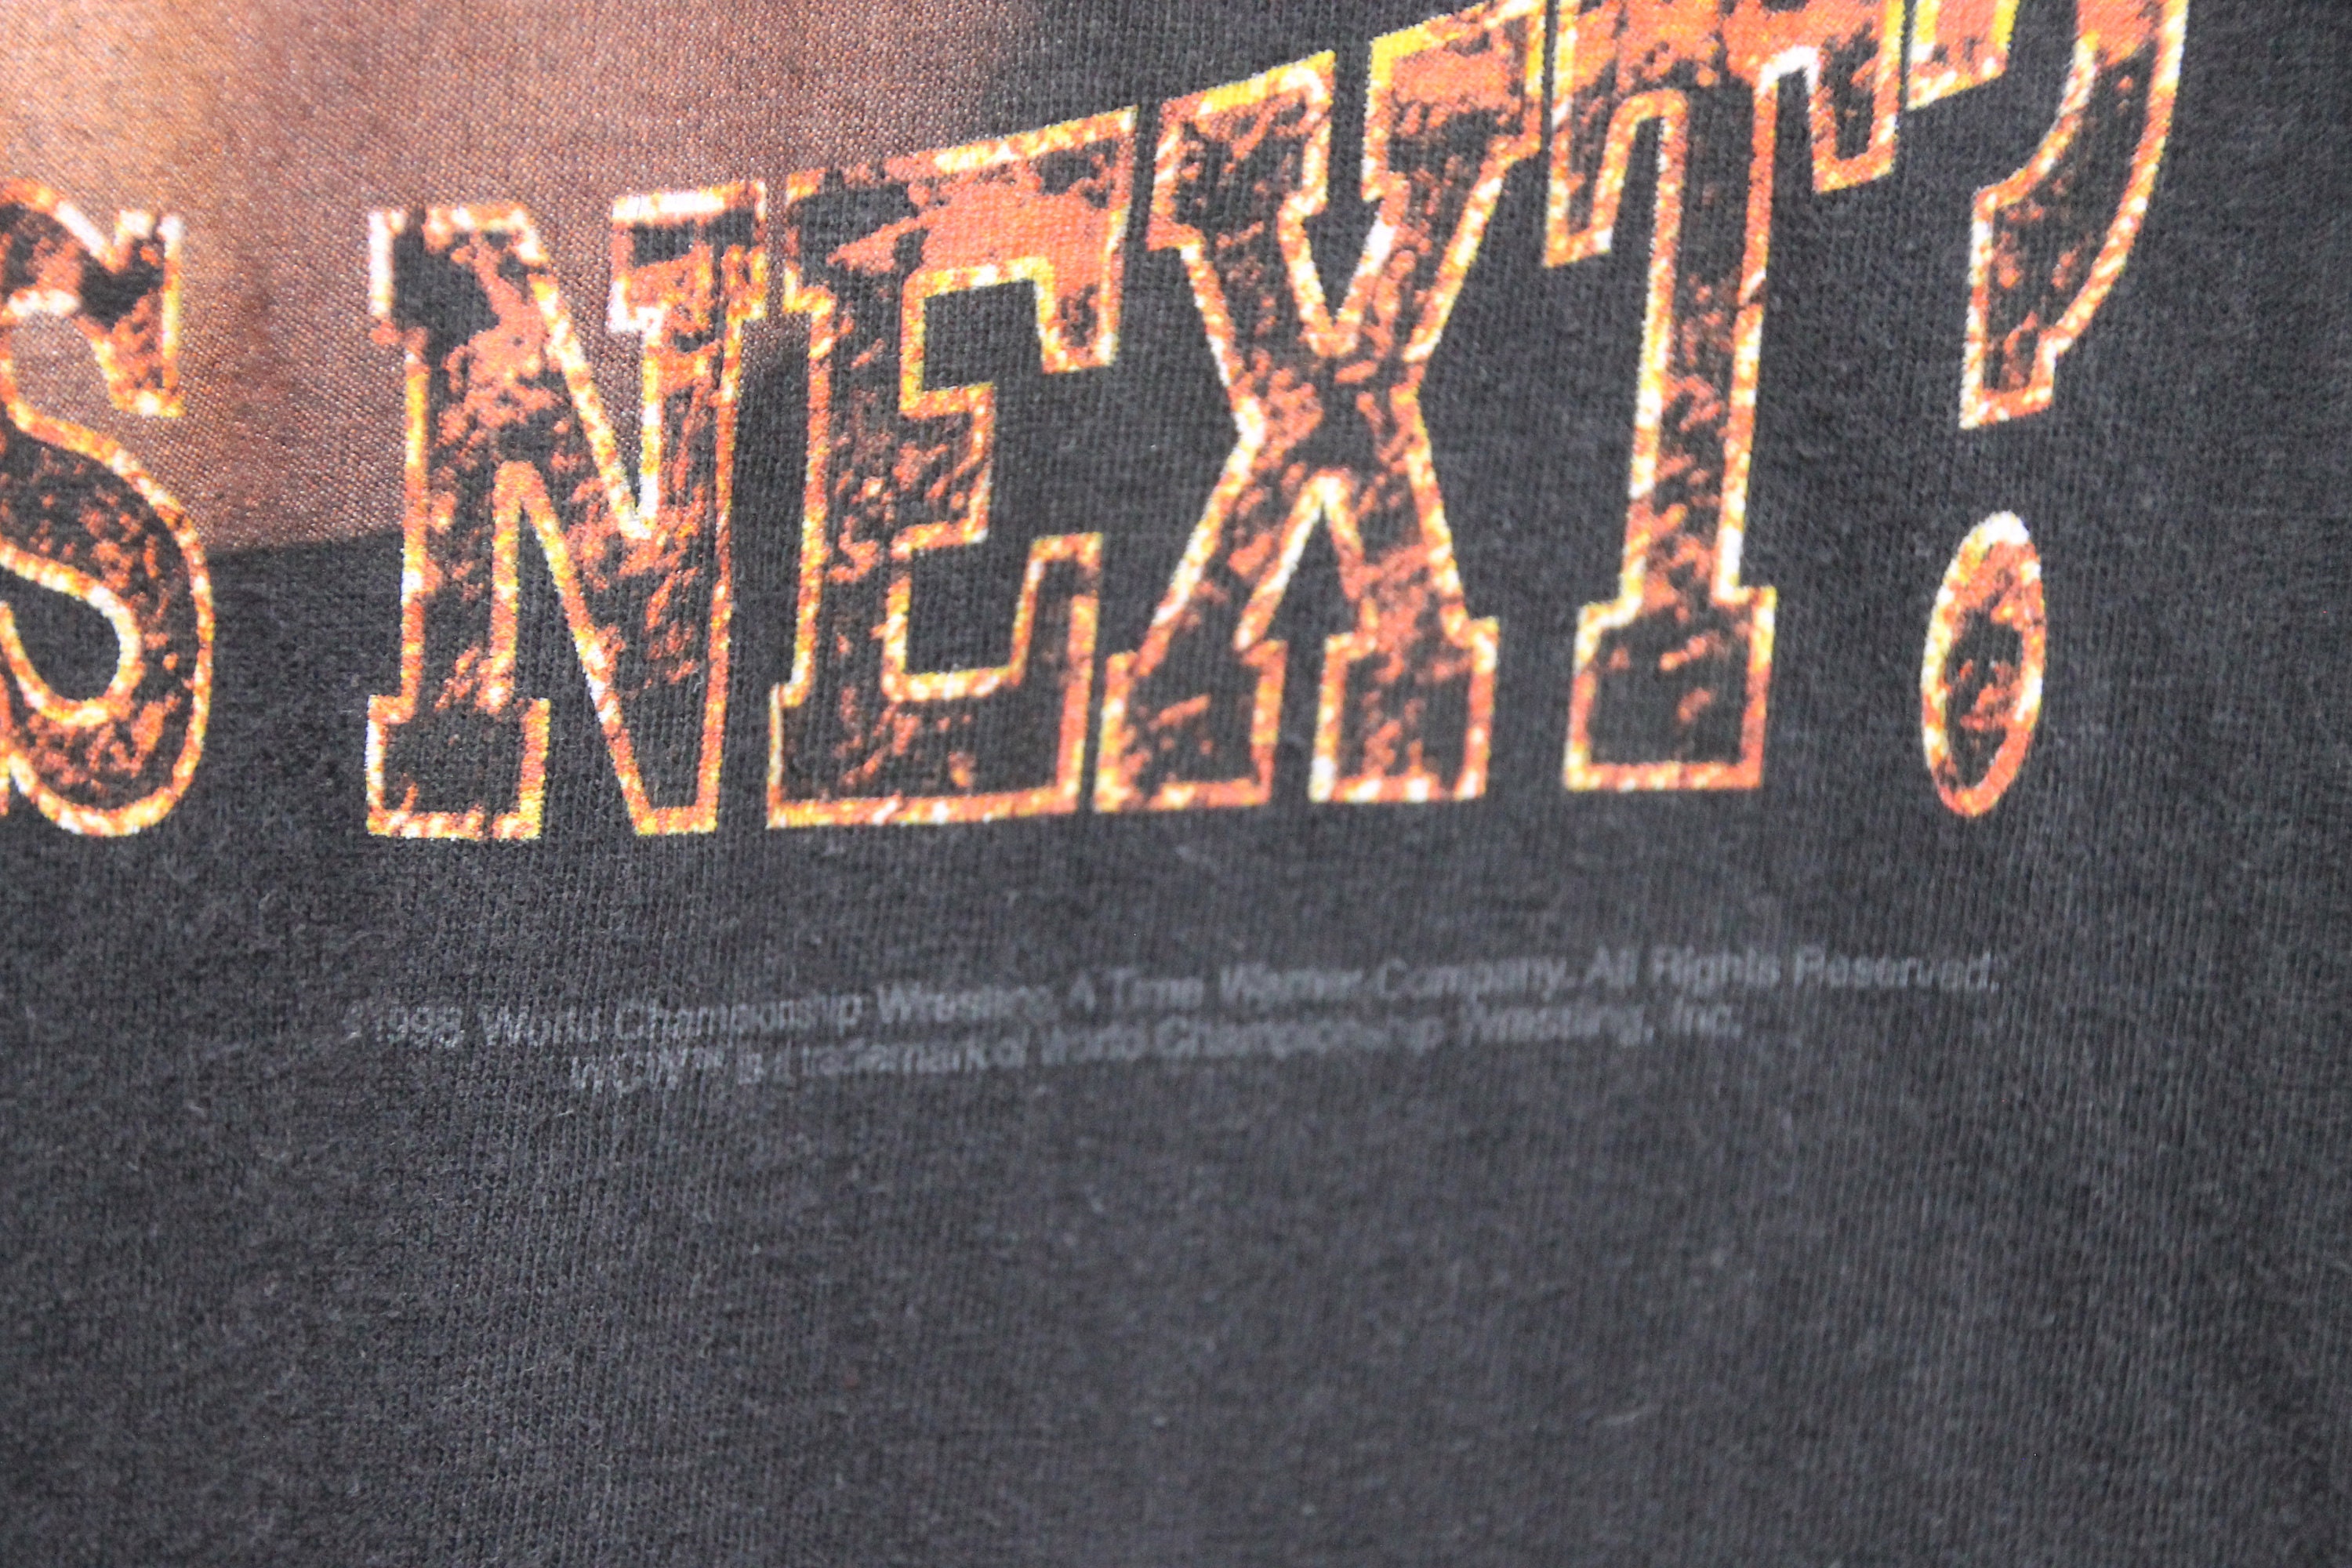 Discover Vintage 1998 Goldberg Who's Next WW Black Wrestling T-Shirt Adult Size Large